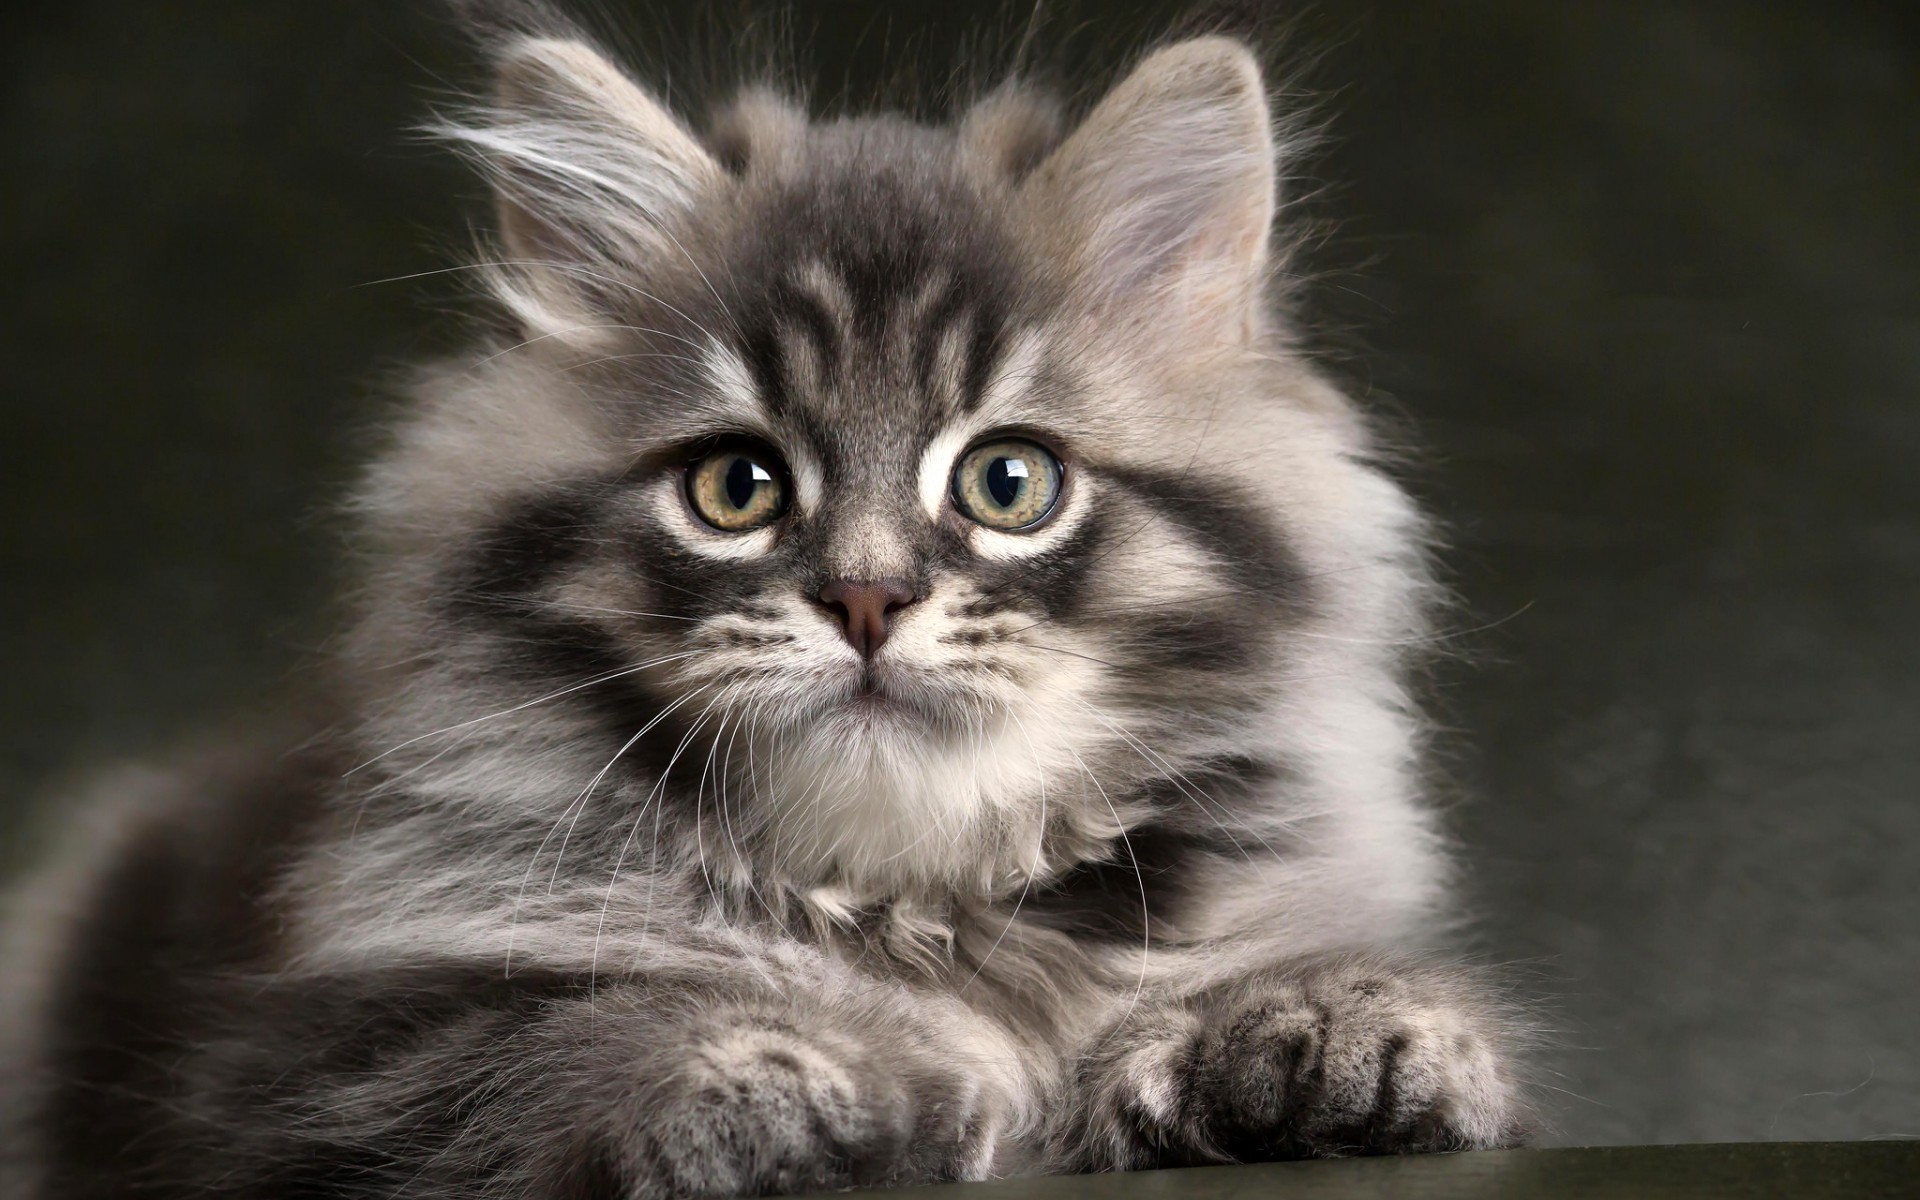 https://s1.1zoom.ru/big3/349/Cats_Kittens_Fluffy_435425.jpg